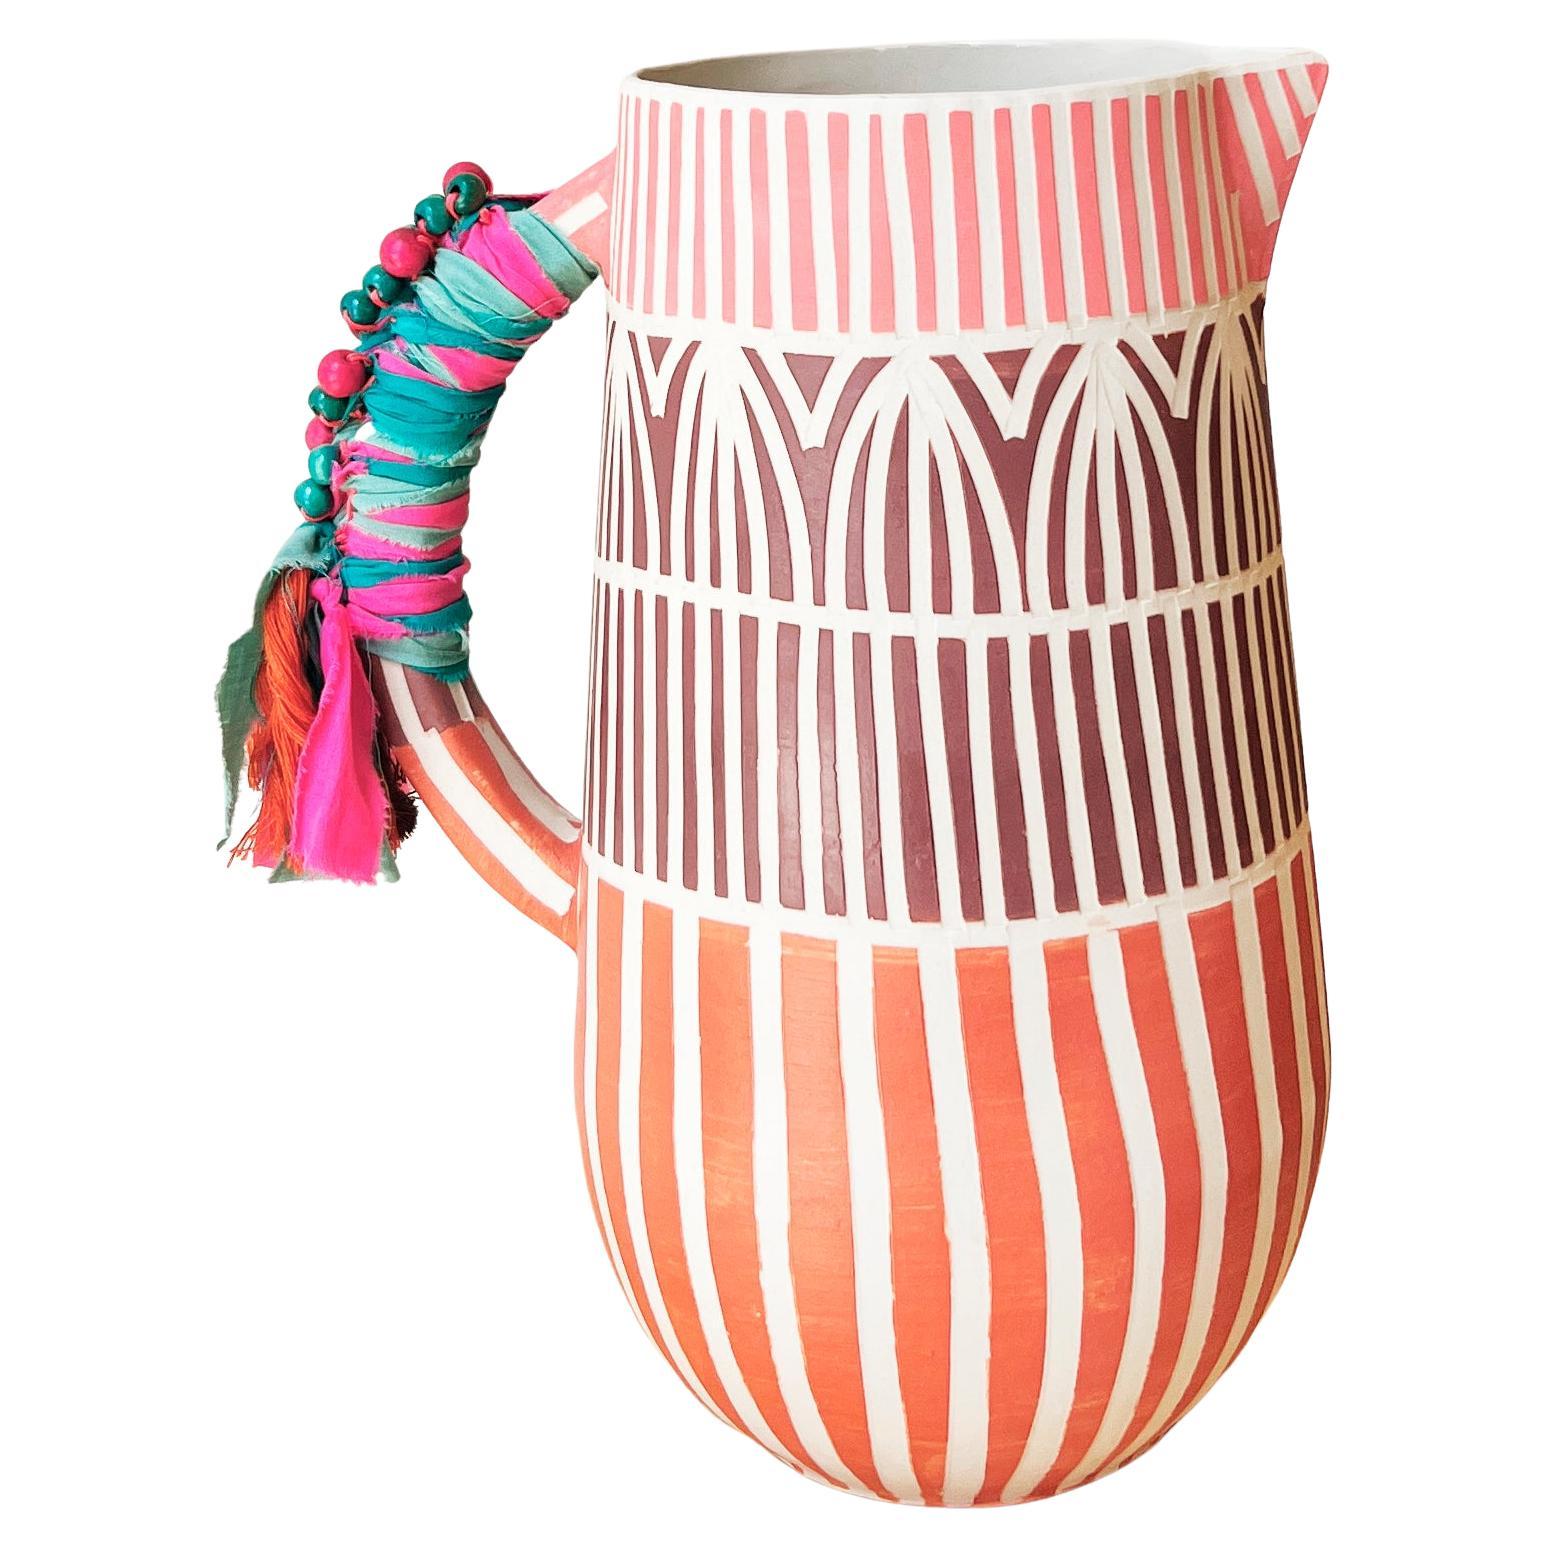 Festa Handmade Whimsical Ceramic Jug in White and Pink Stripes For Sale